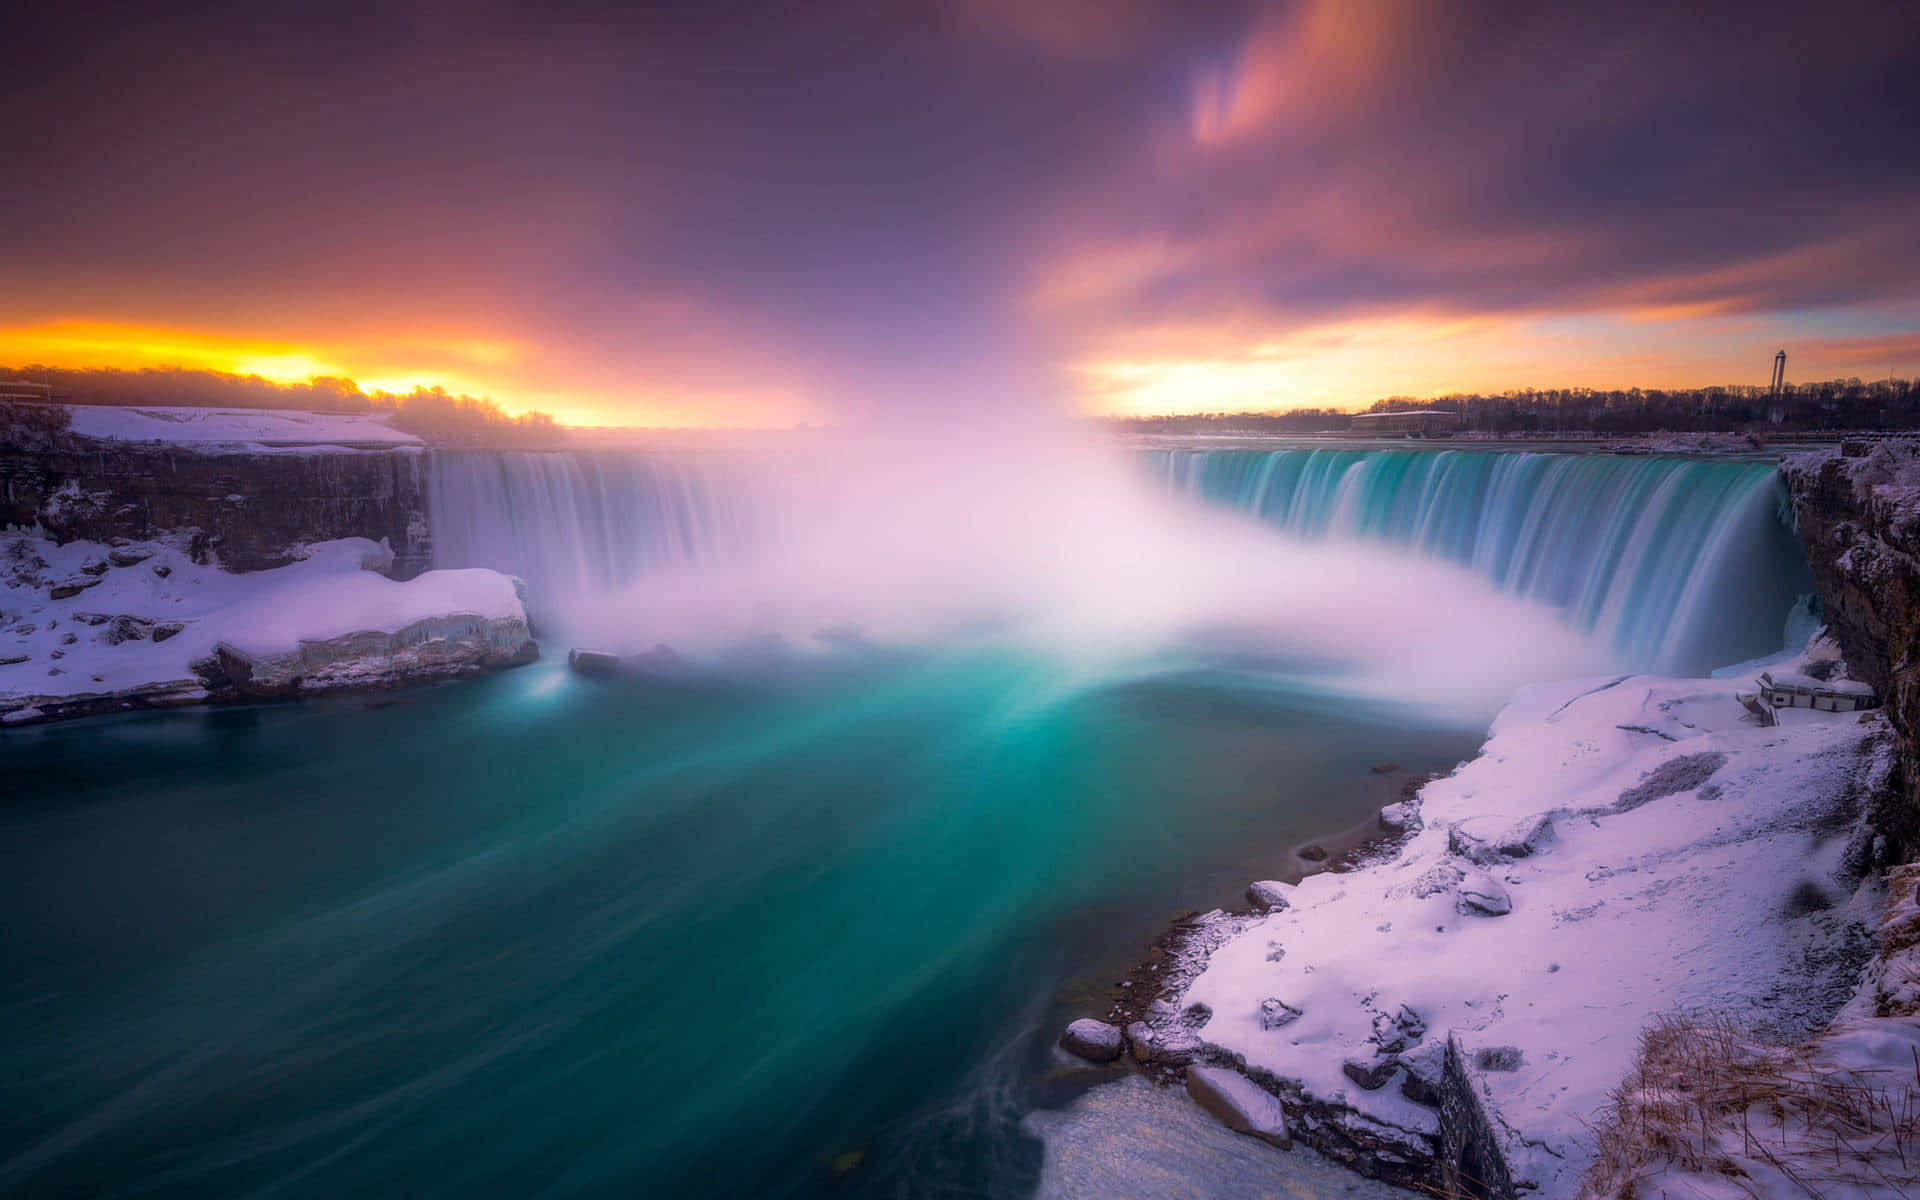 720p View of Niagara Falls